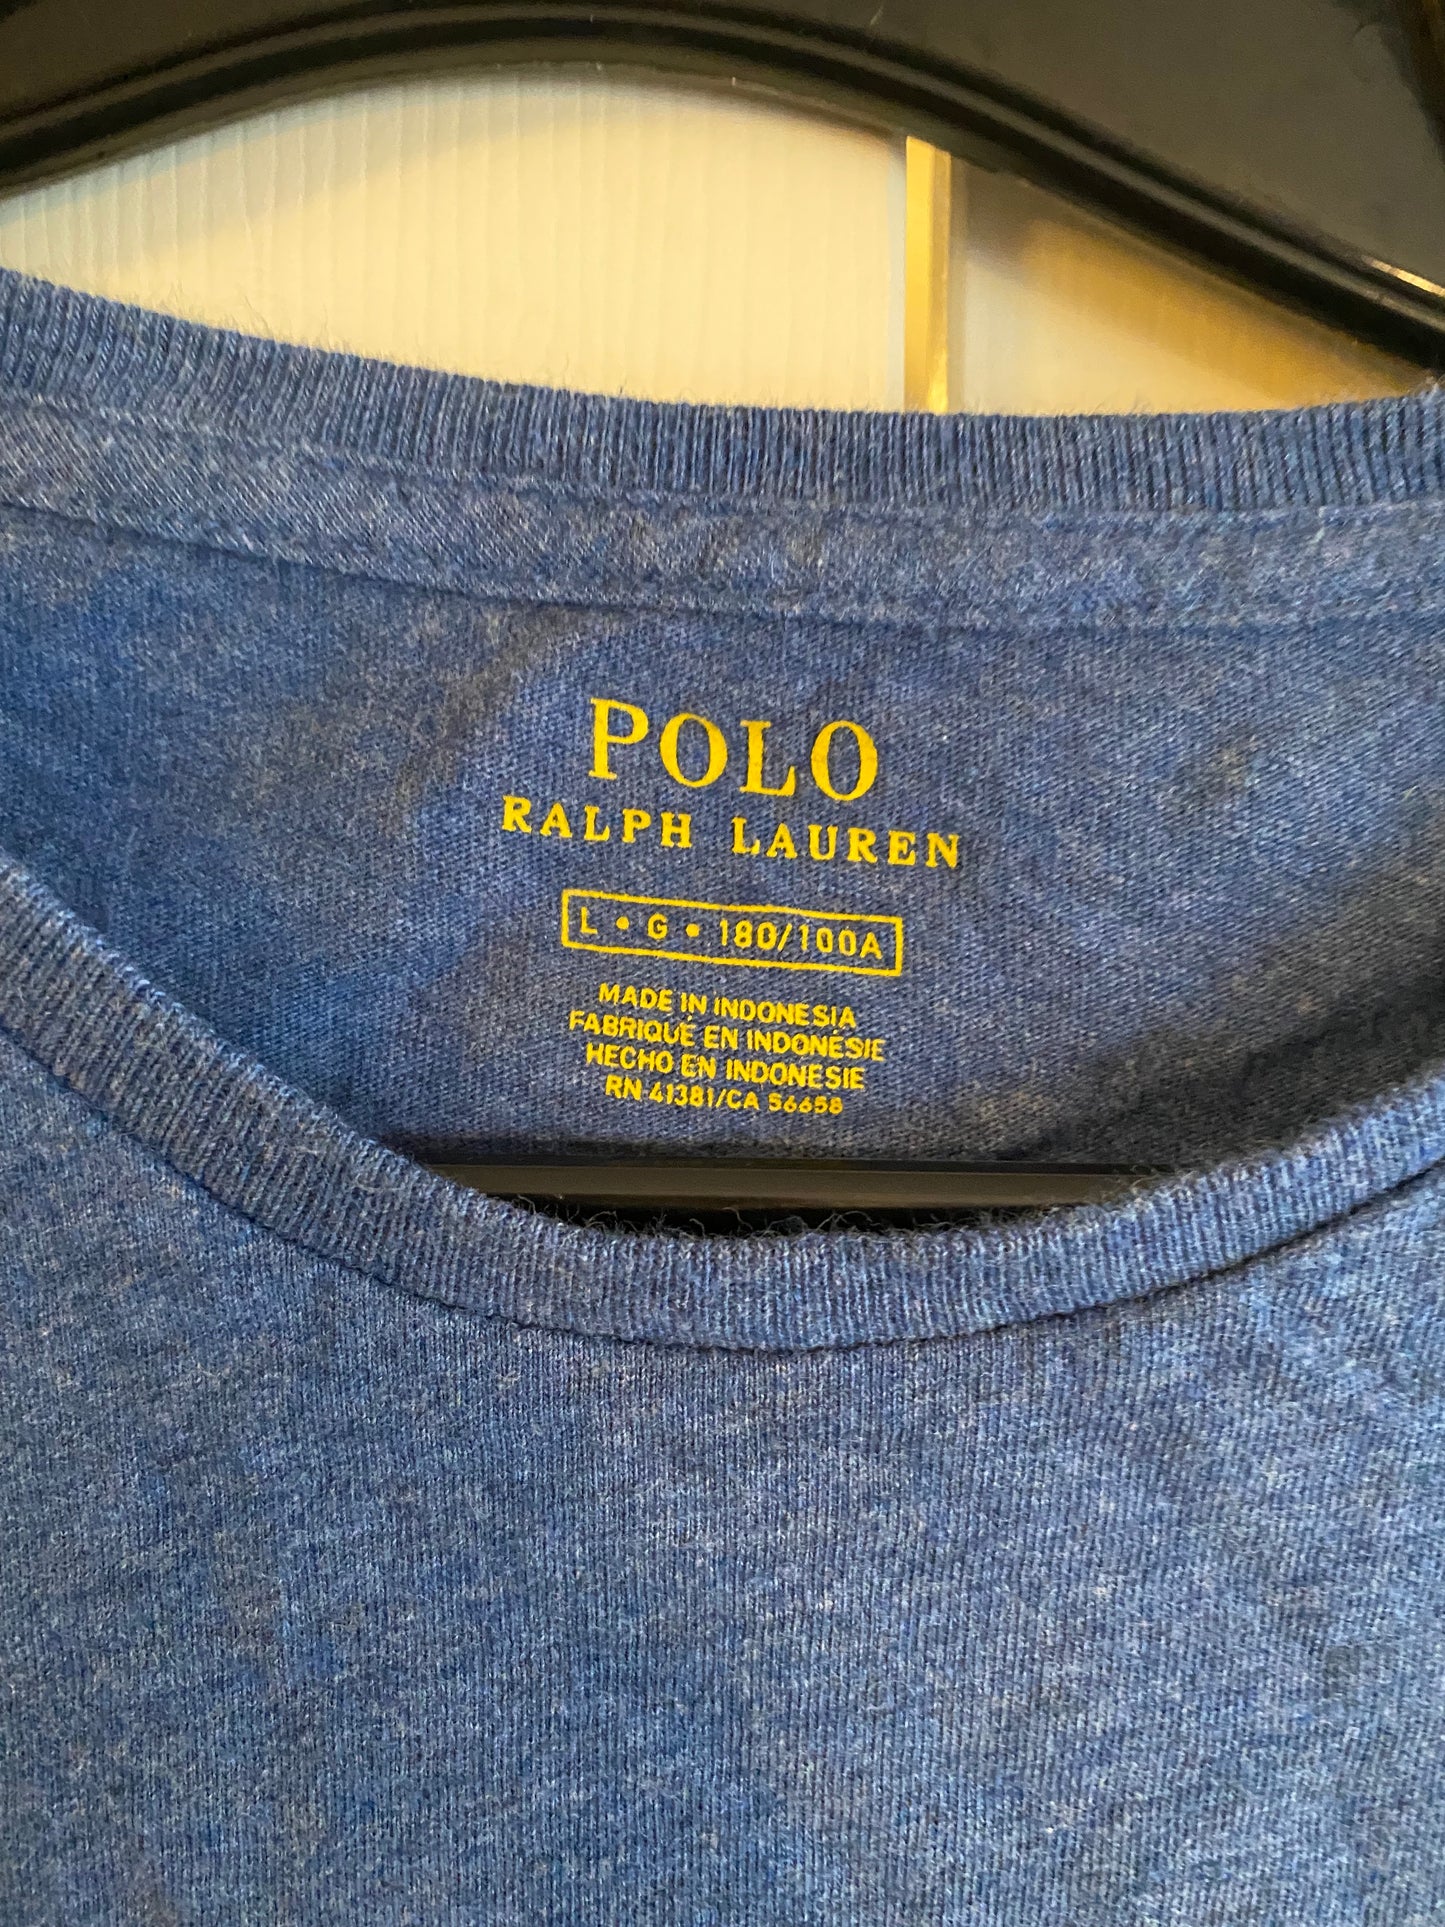 Polo Ralph Lauren Navy Classic Fit Cotton T-Shirt Sz Large L with Logo